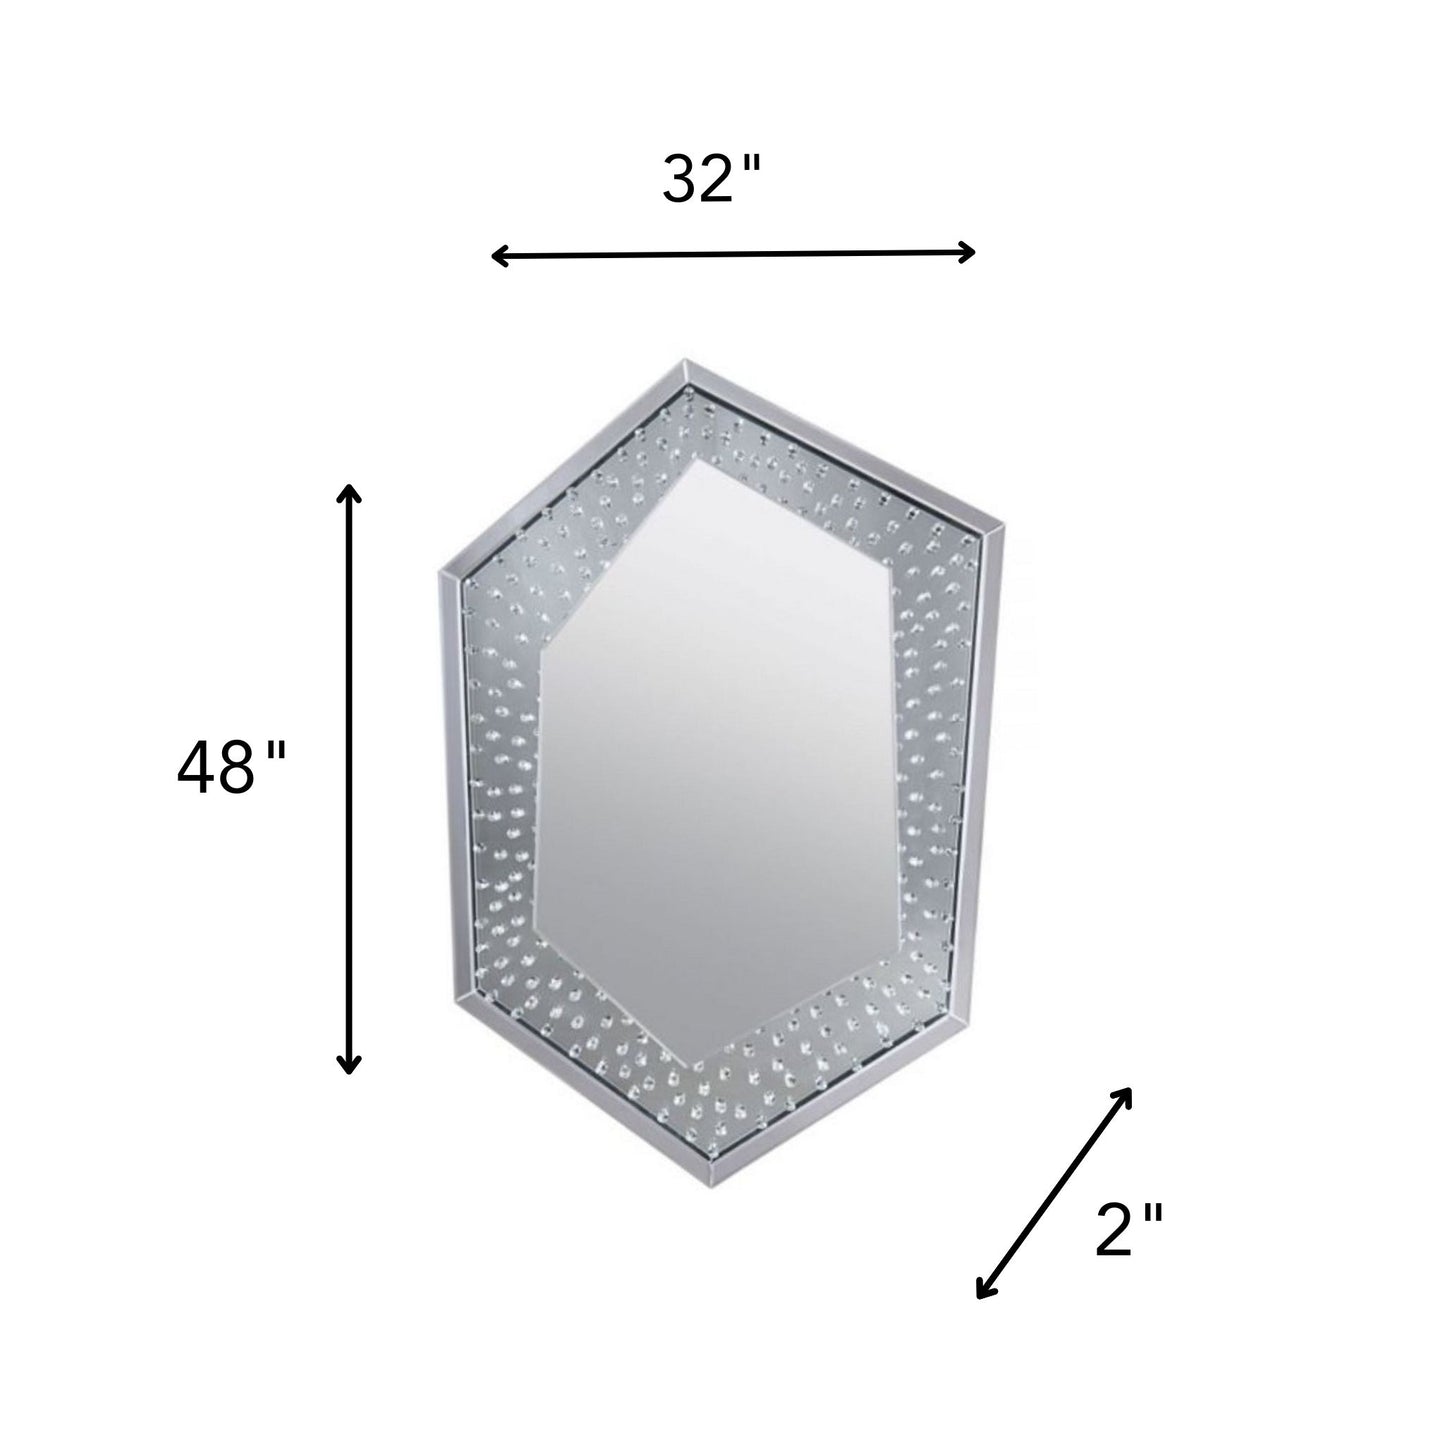 Hexagon Mirror with Crystals